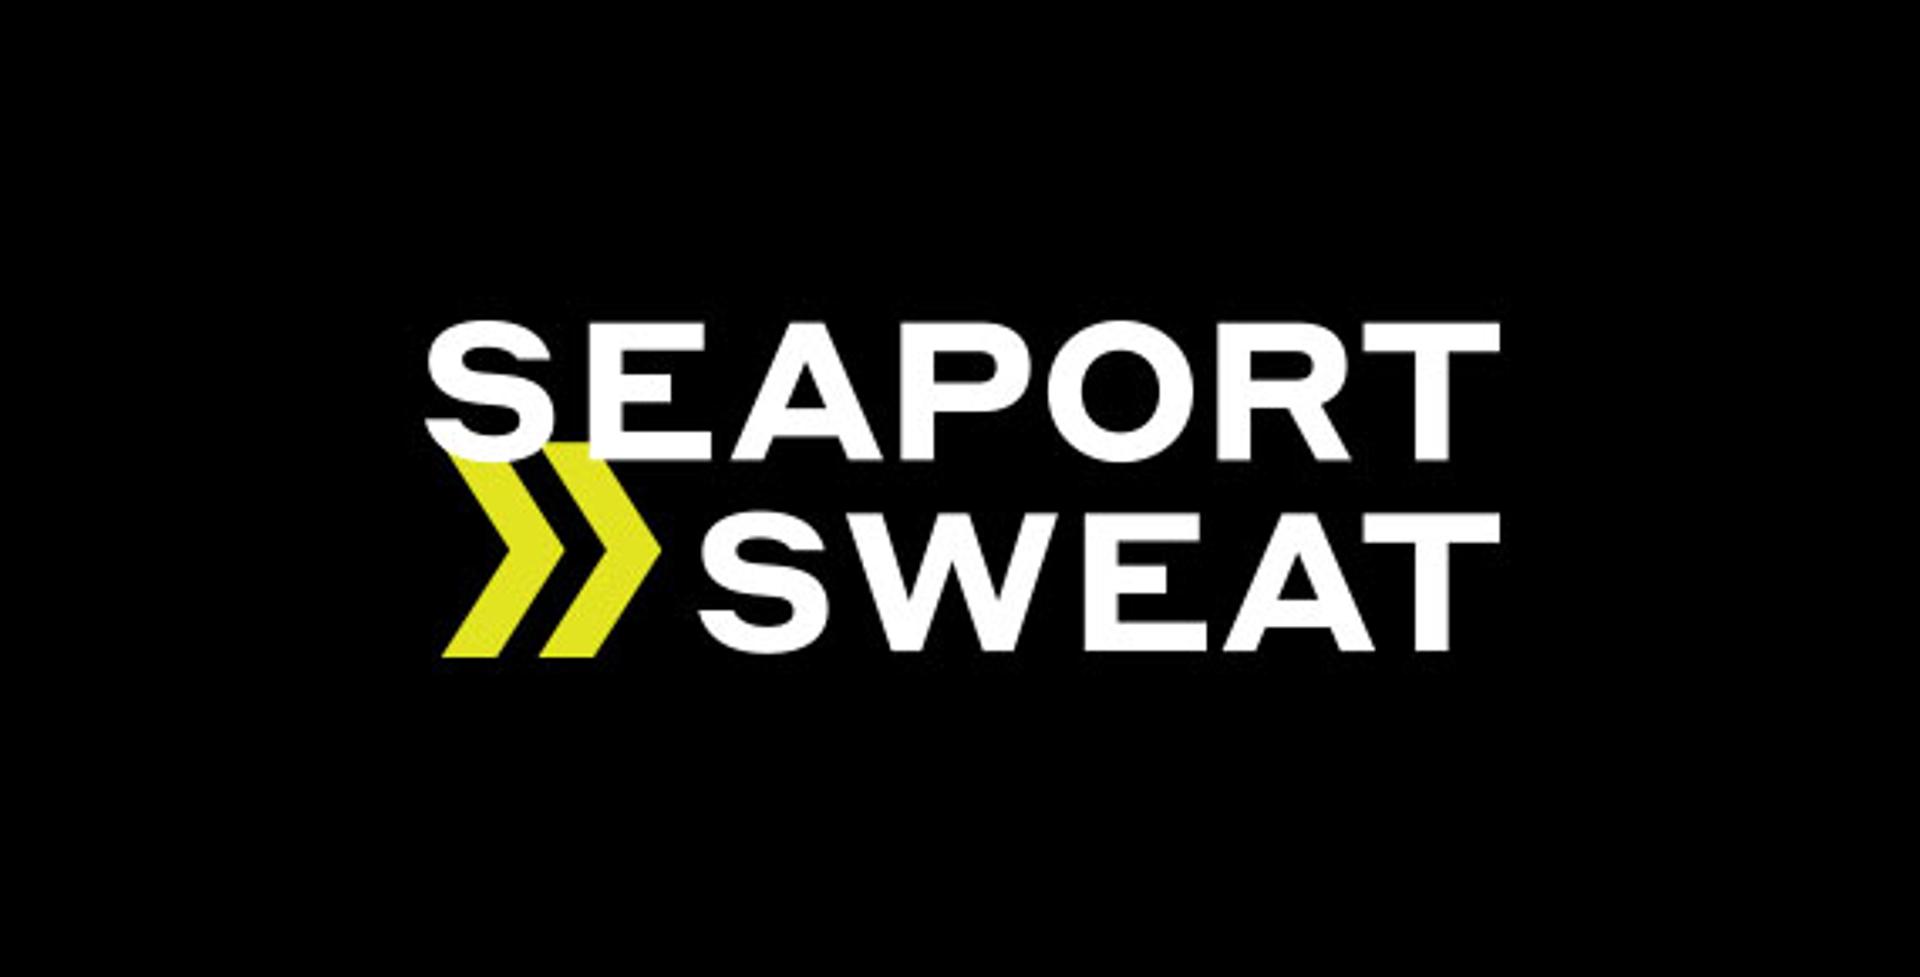 Seaport Sweat: Klaviyo Takeover